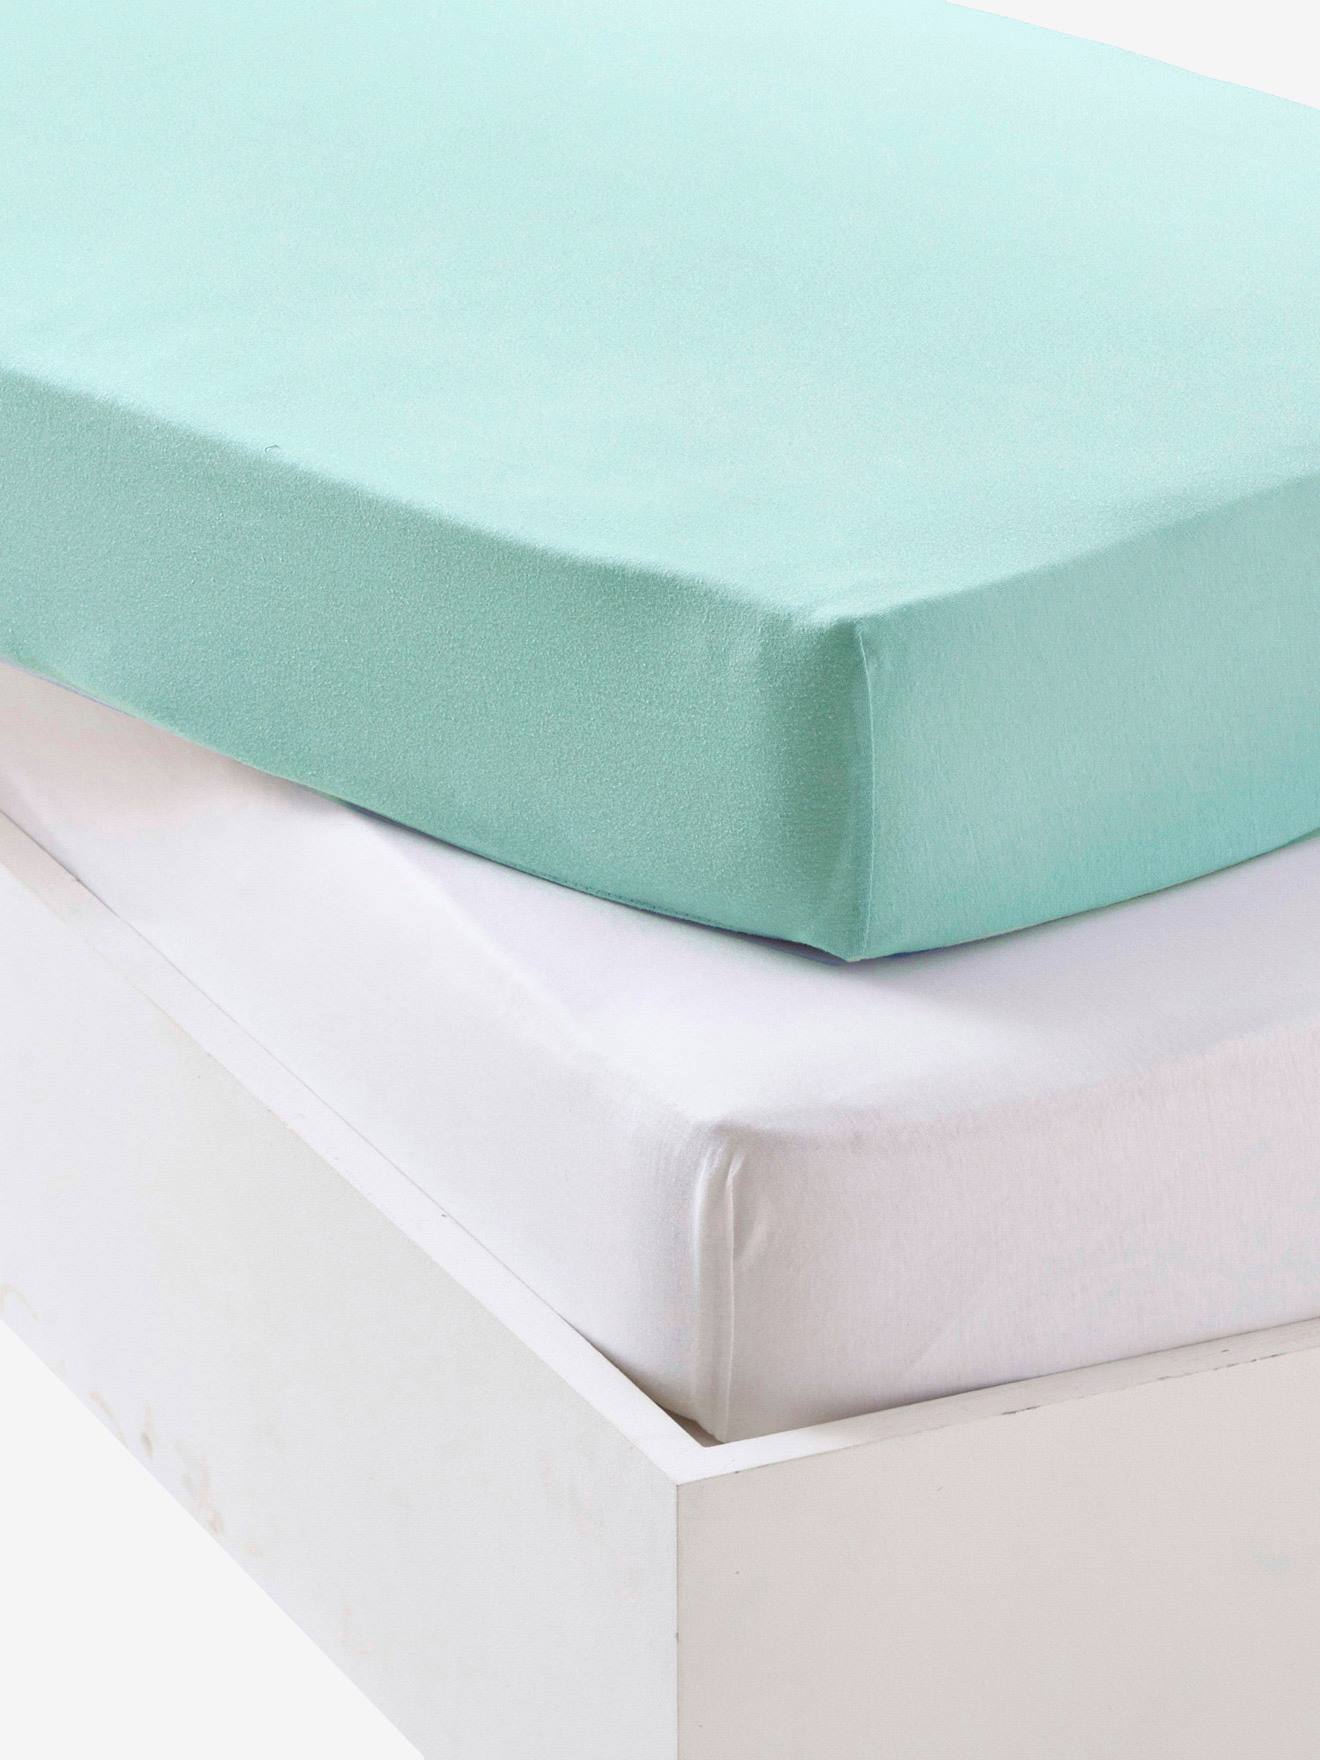 Lot de 2 draps-housses bébé en jersey extensible Oeko-Tex® bleu vert + blanc - Vertbaudet